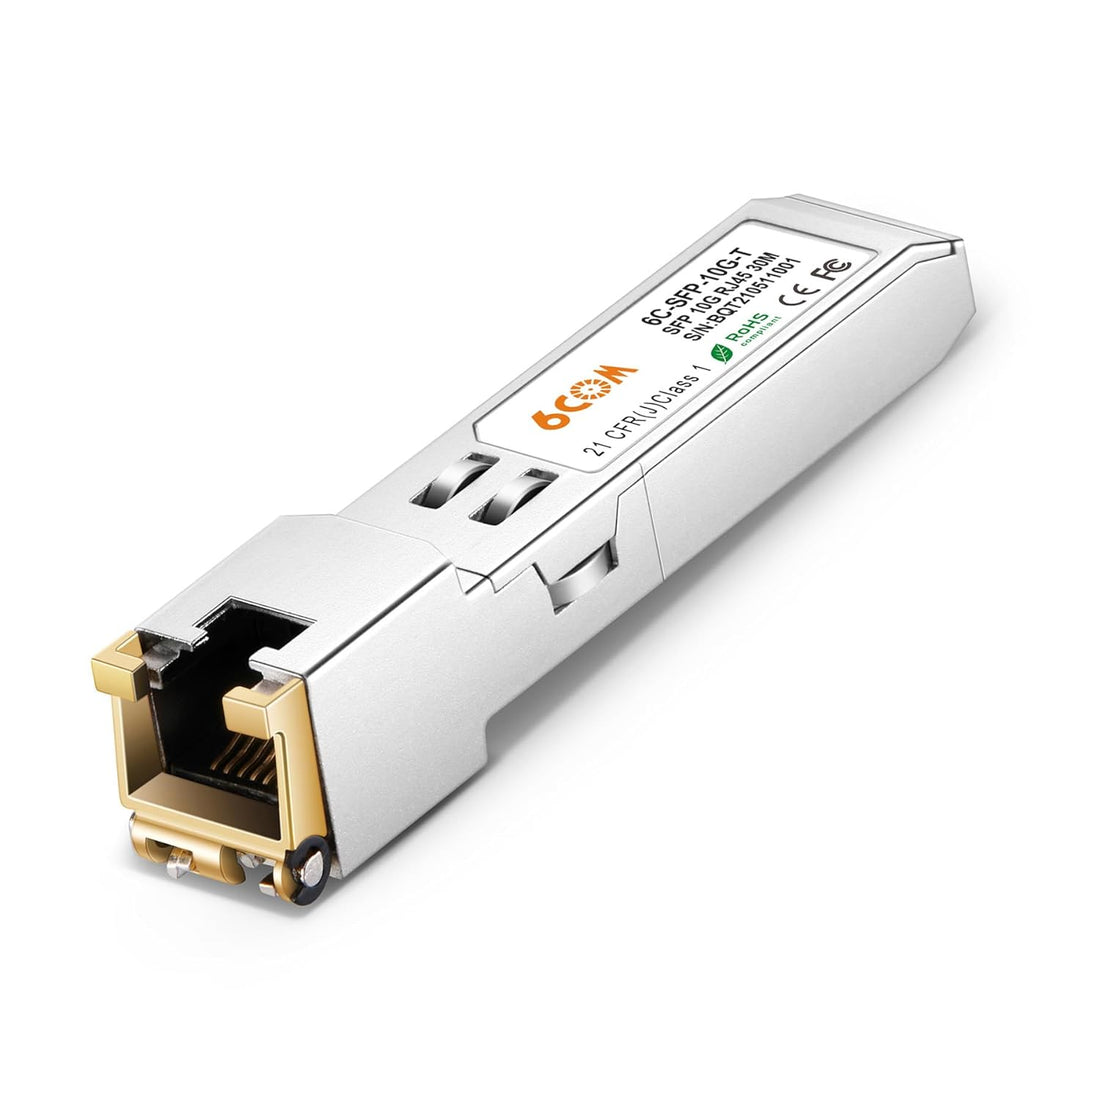 6COM SFP+ to RJ45 Copper Module 10GBase-T Transceiver for Cisco SFP-10G-T-S, Ubiquiti, D-Link, Supermicro, Netgear, Mikrotik, up to 30m